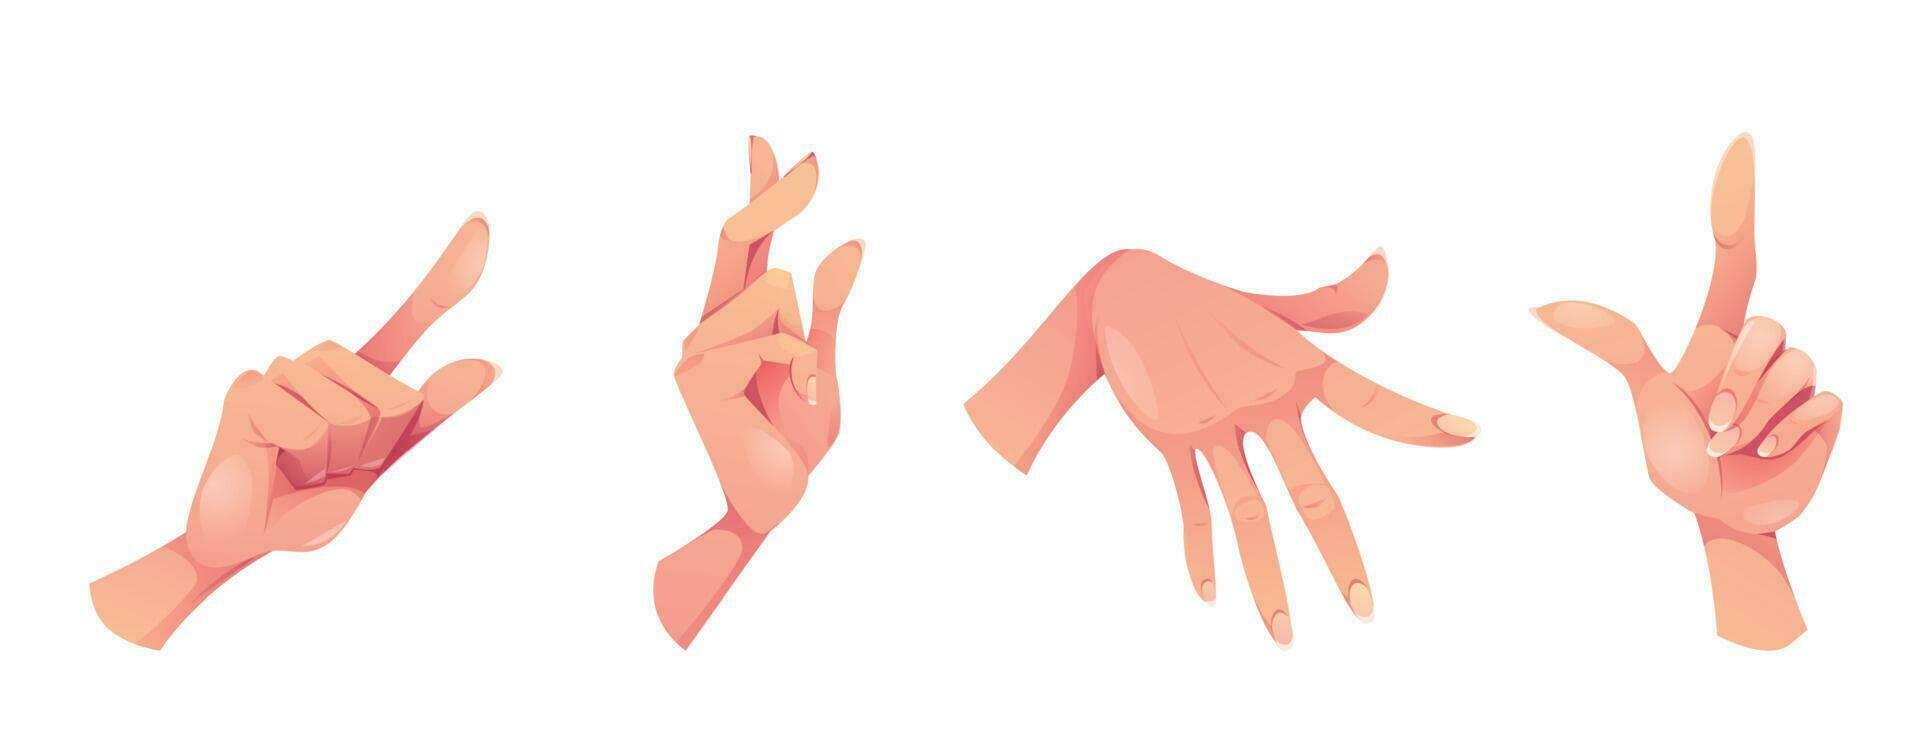 Cartoon woman hand gesture, finger sign icon set vector